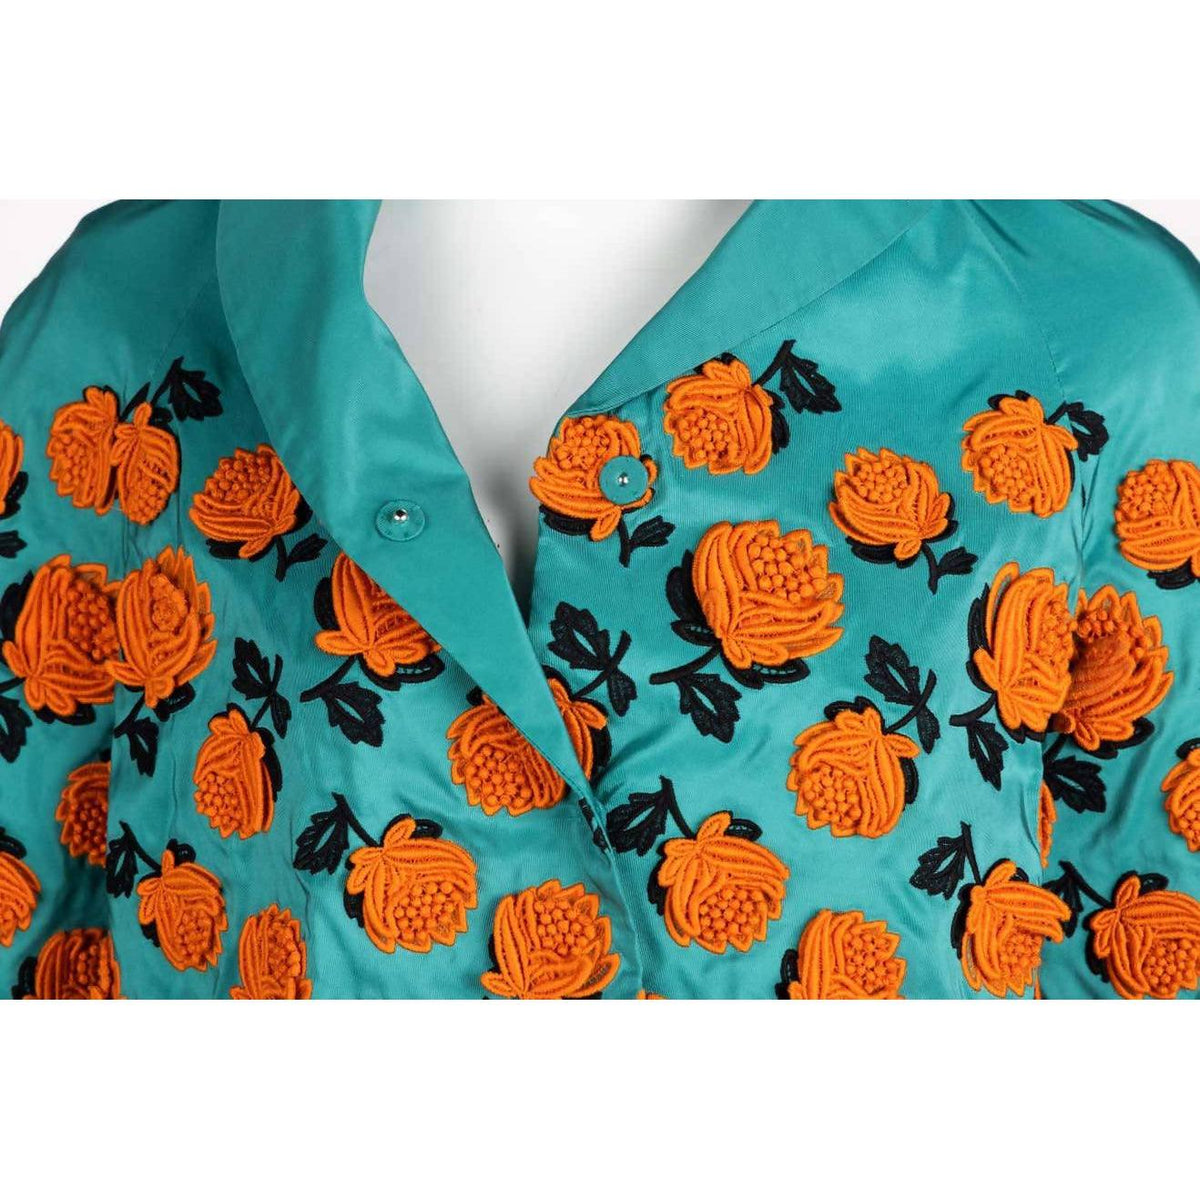 Pre-Owned PRADA Turquoise Silk Taffeta Floral Applique Jacket Spring 2012 | Size S/M - theREMODA